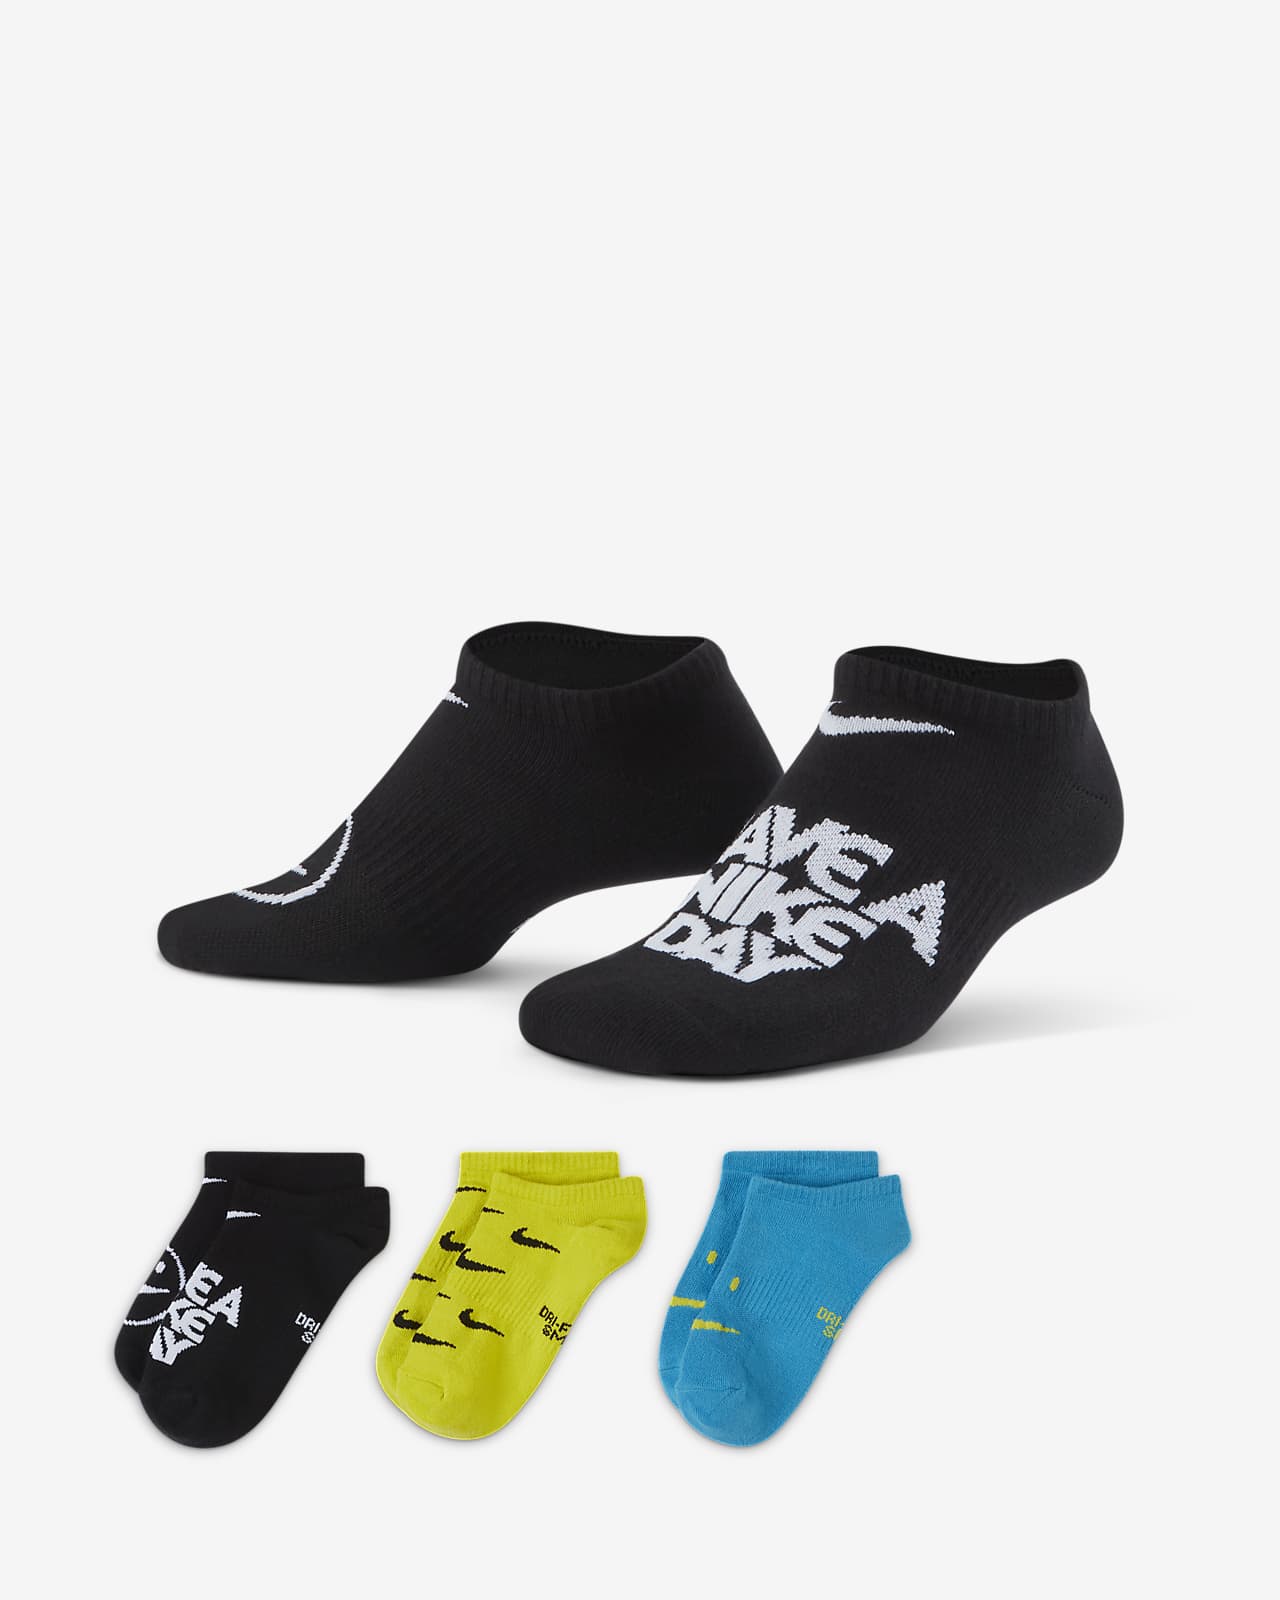 Nike Everyday Older Kids' Lightweight No-Show Socks (3 Pairs)